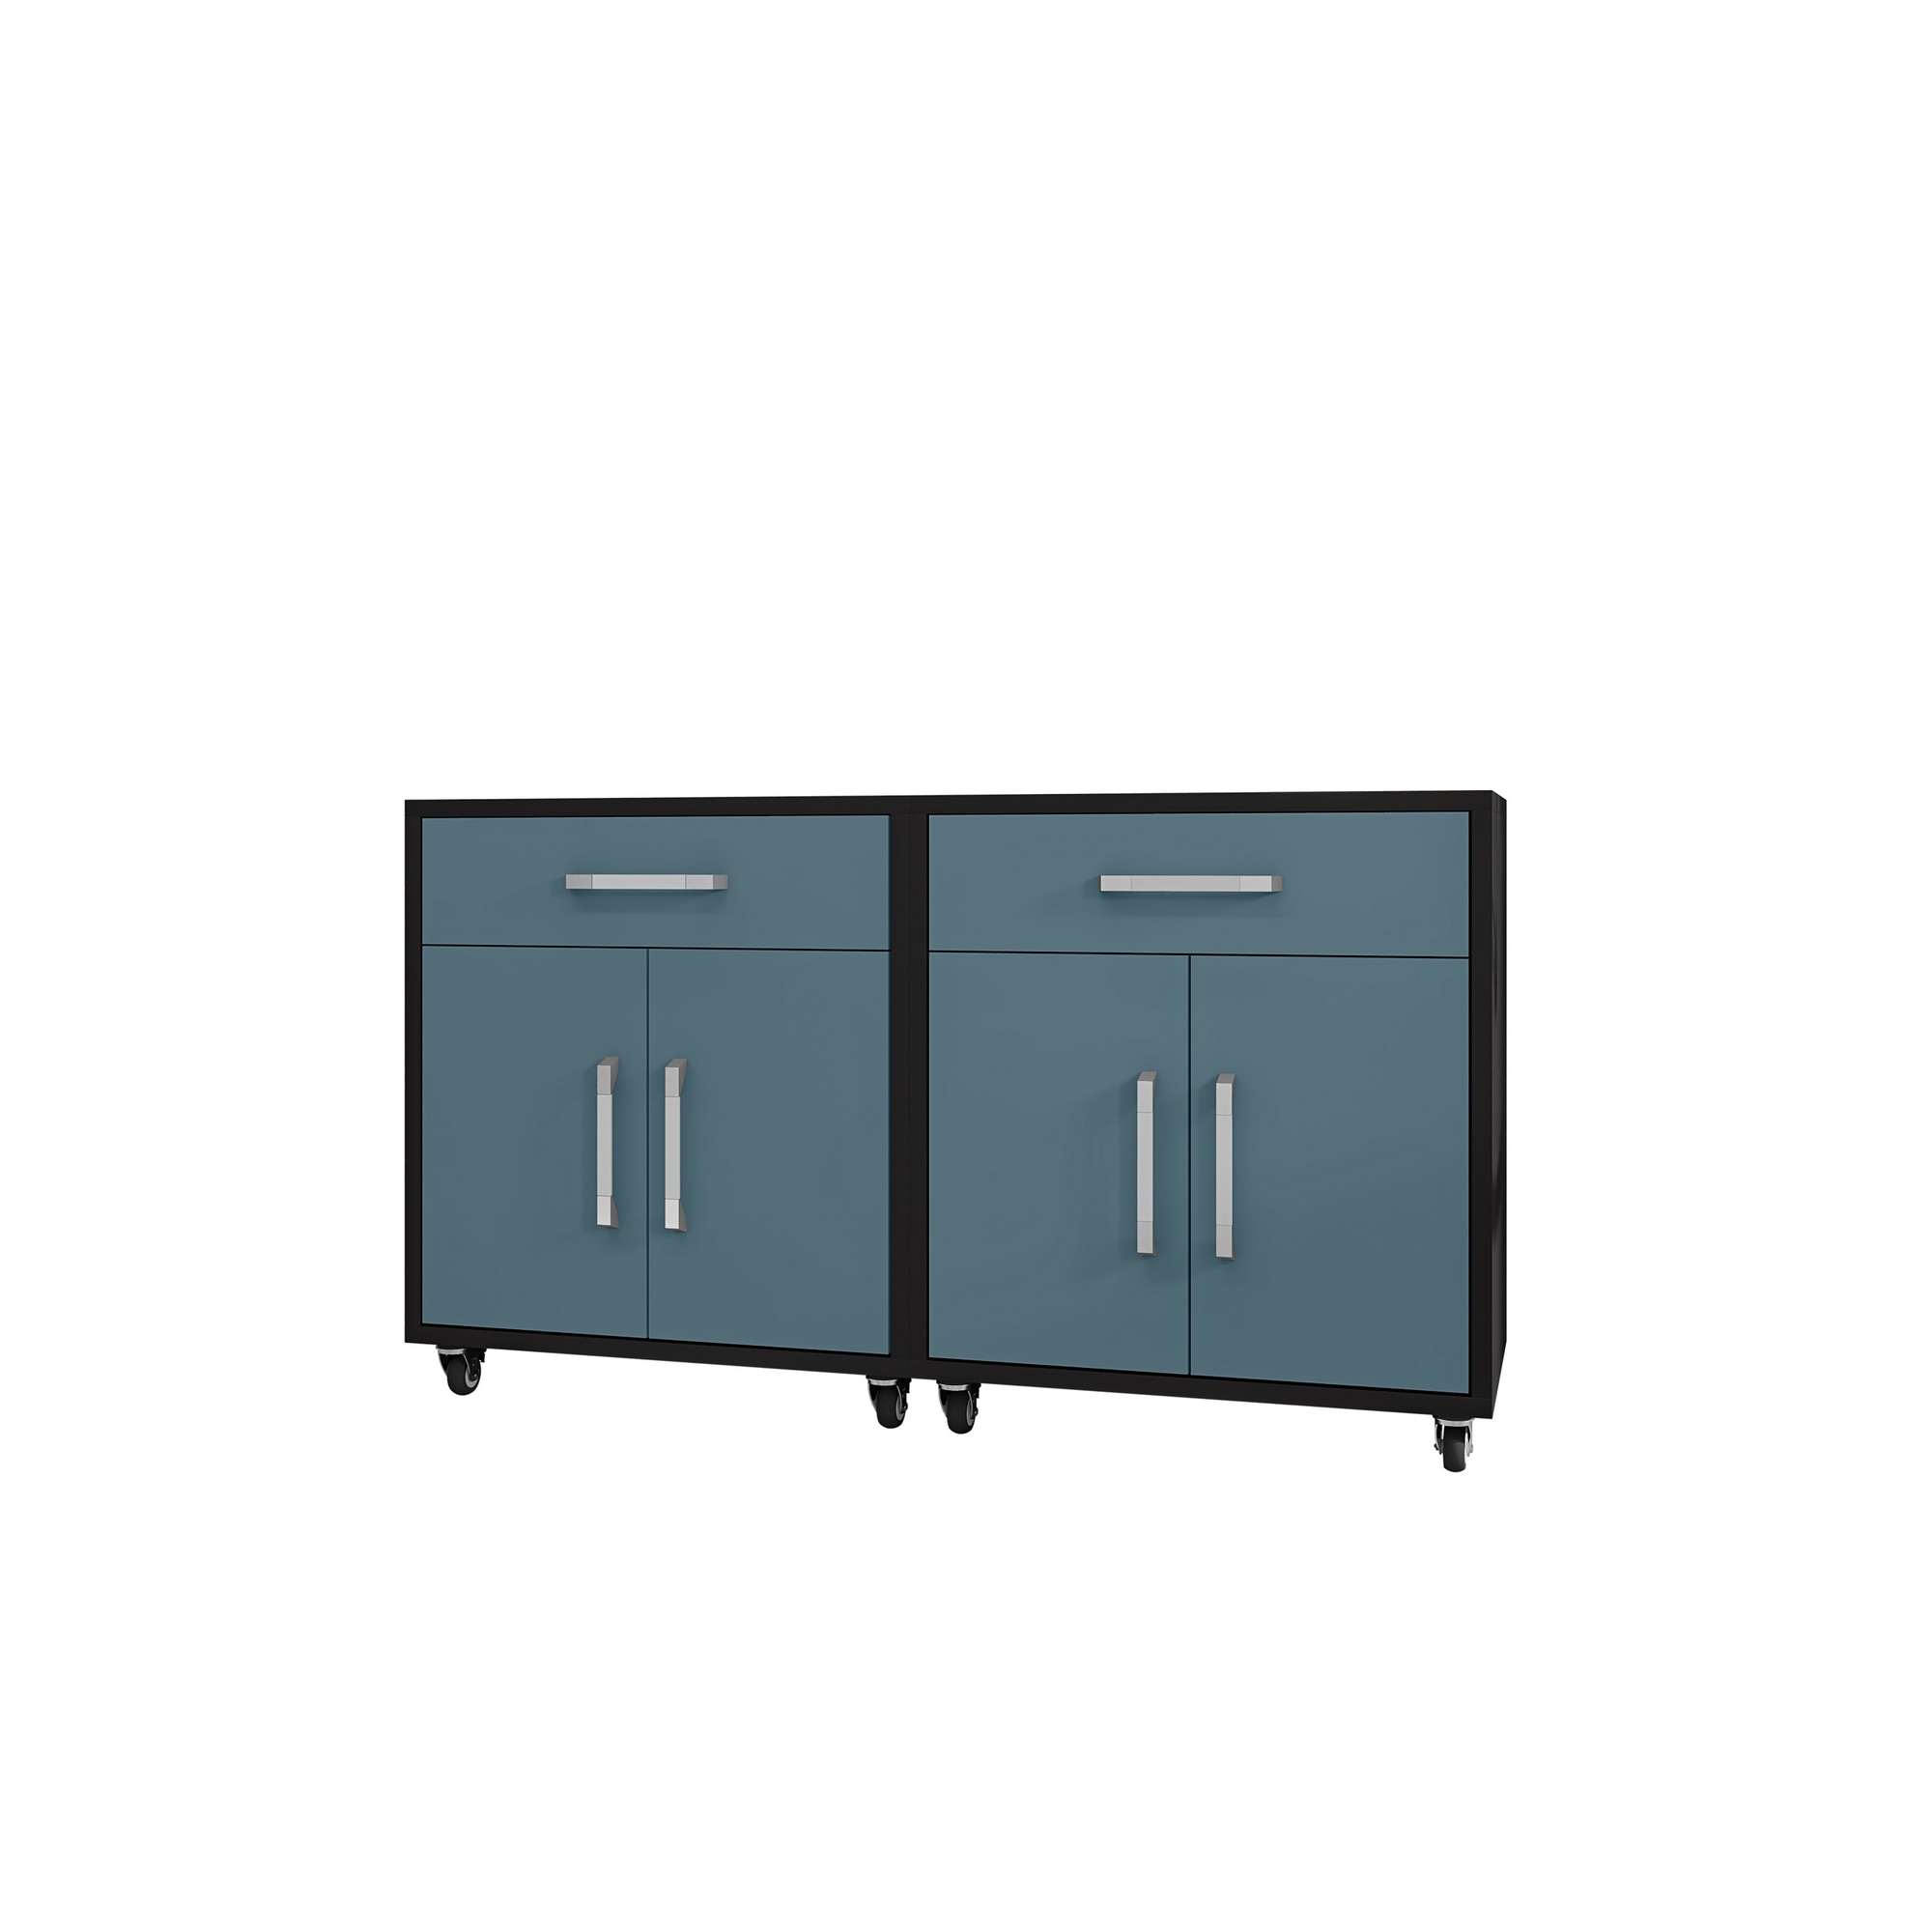 Manhattan Comfort, Eiffel Mobile Garage Cabinet Black and Aqua Set 2 Height 34.41 in, Width 56.7 in, Color Blue, Model 2-252BMC